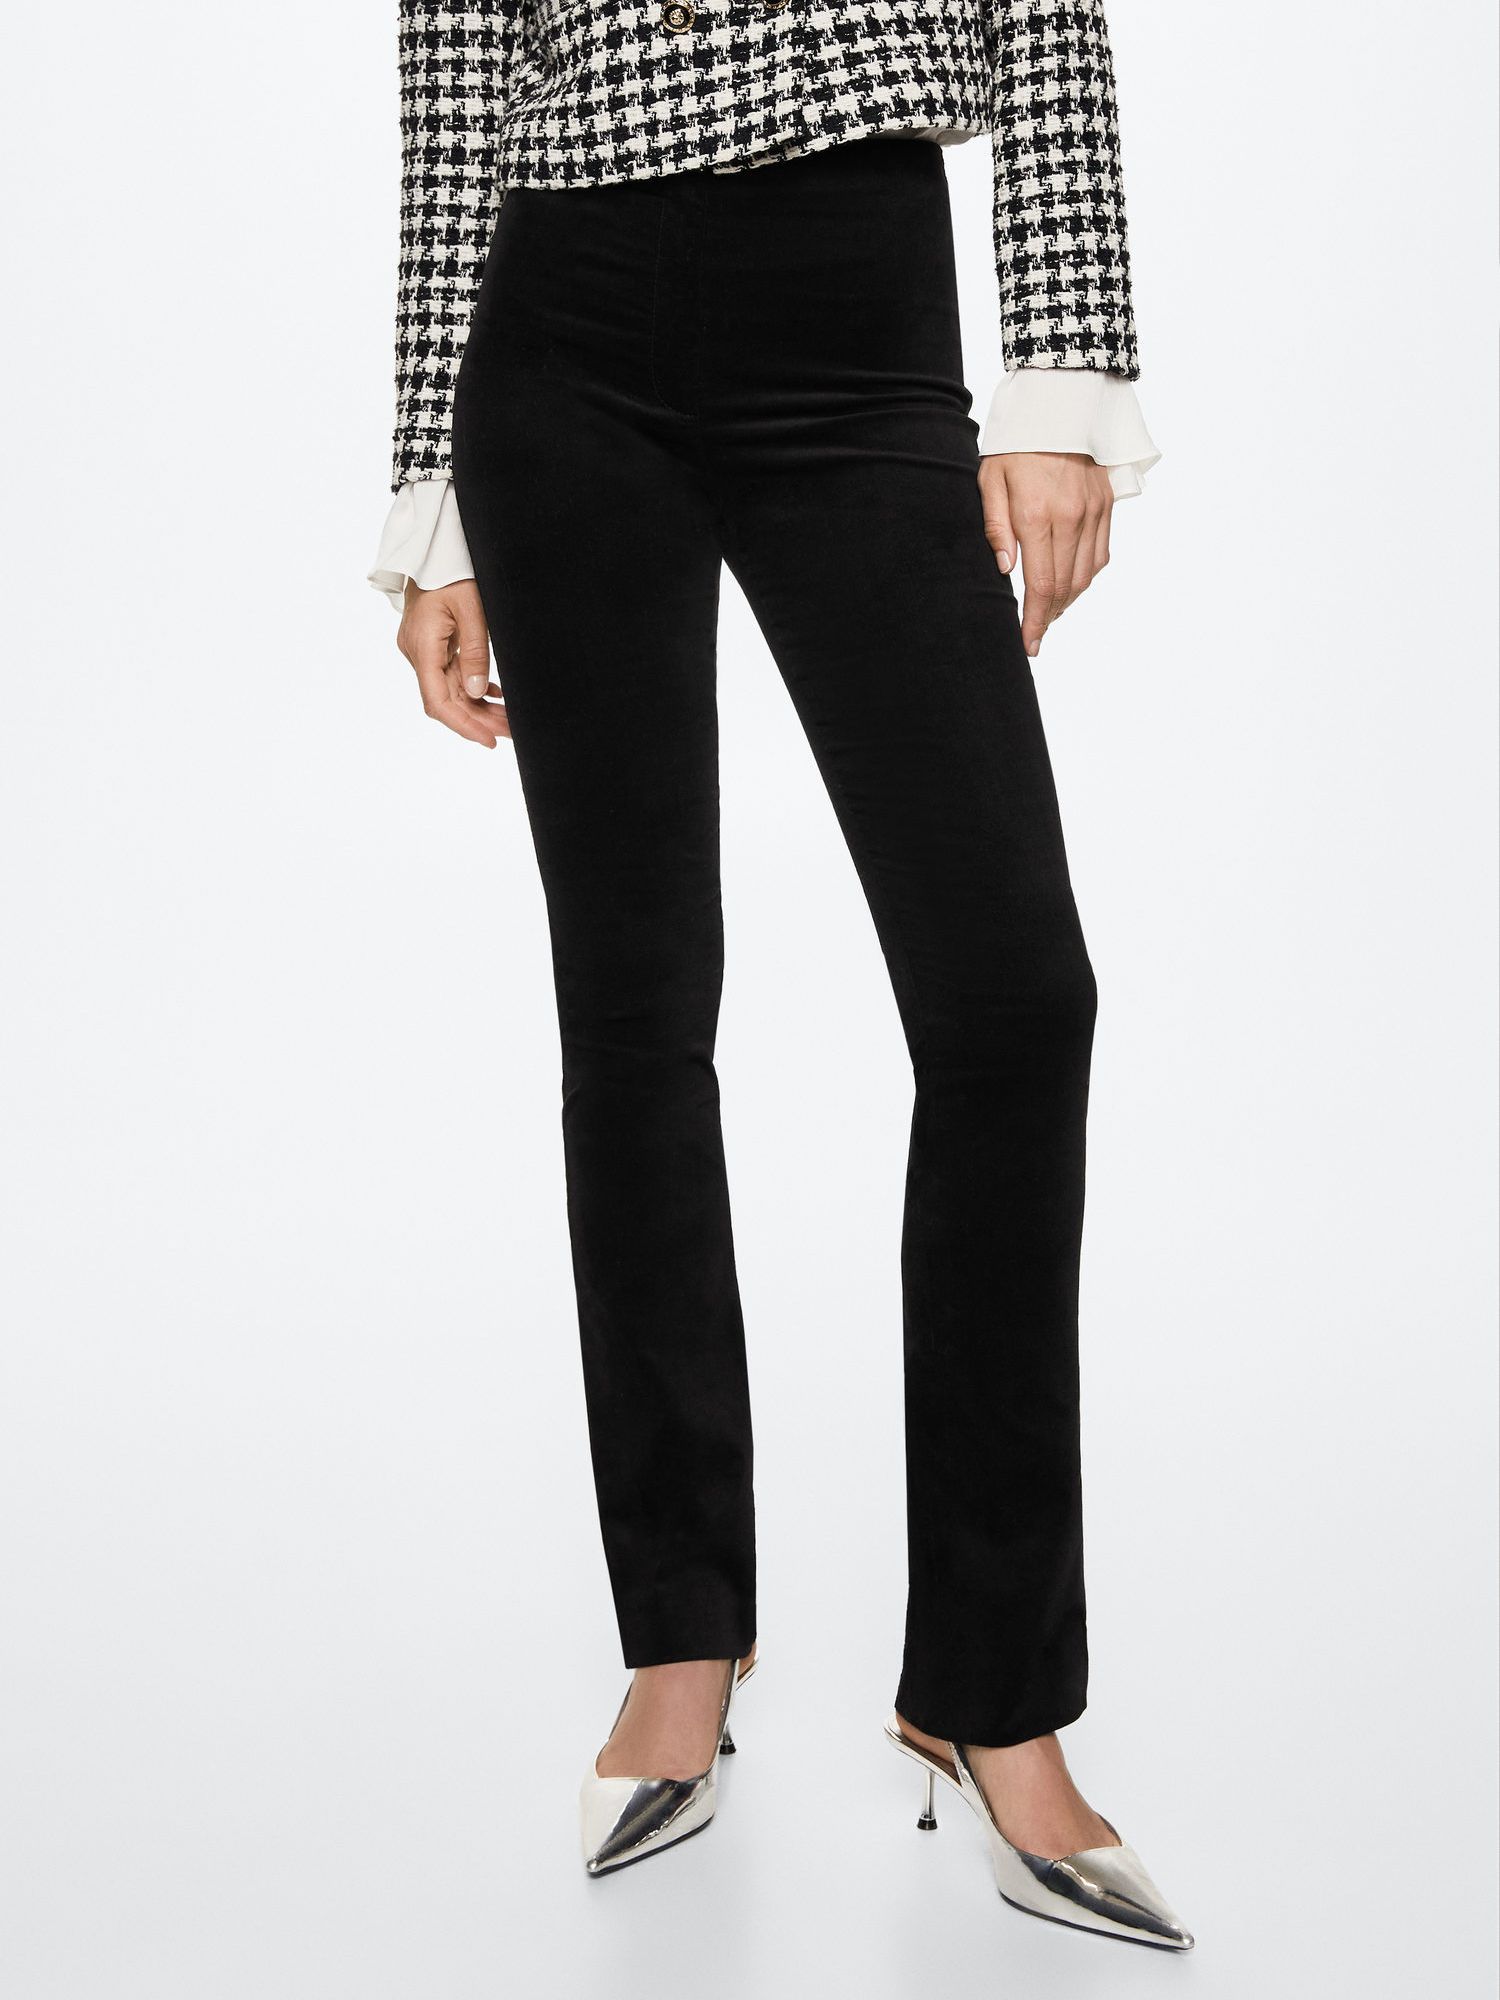 Straight velvet trousers black - Teenage girl - XXS - MANGO TEEN | £25.99 |  Buchanan Galleries